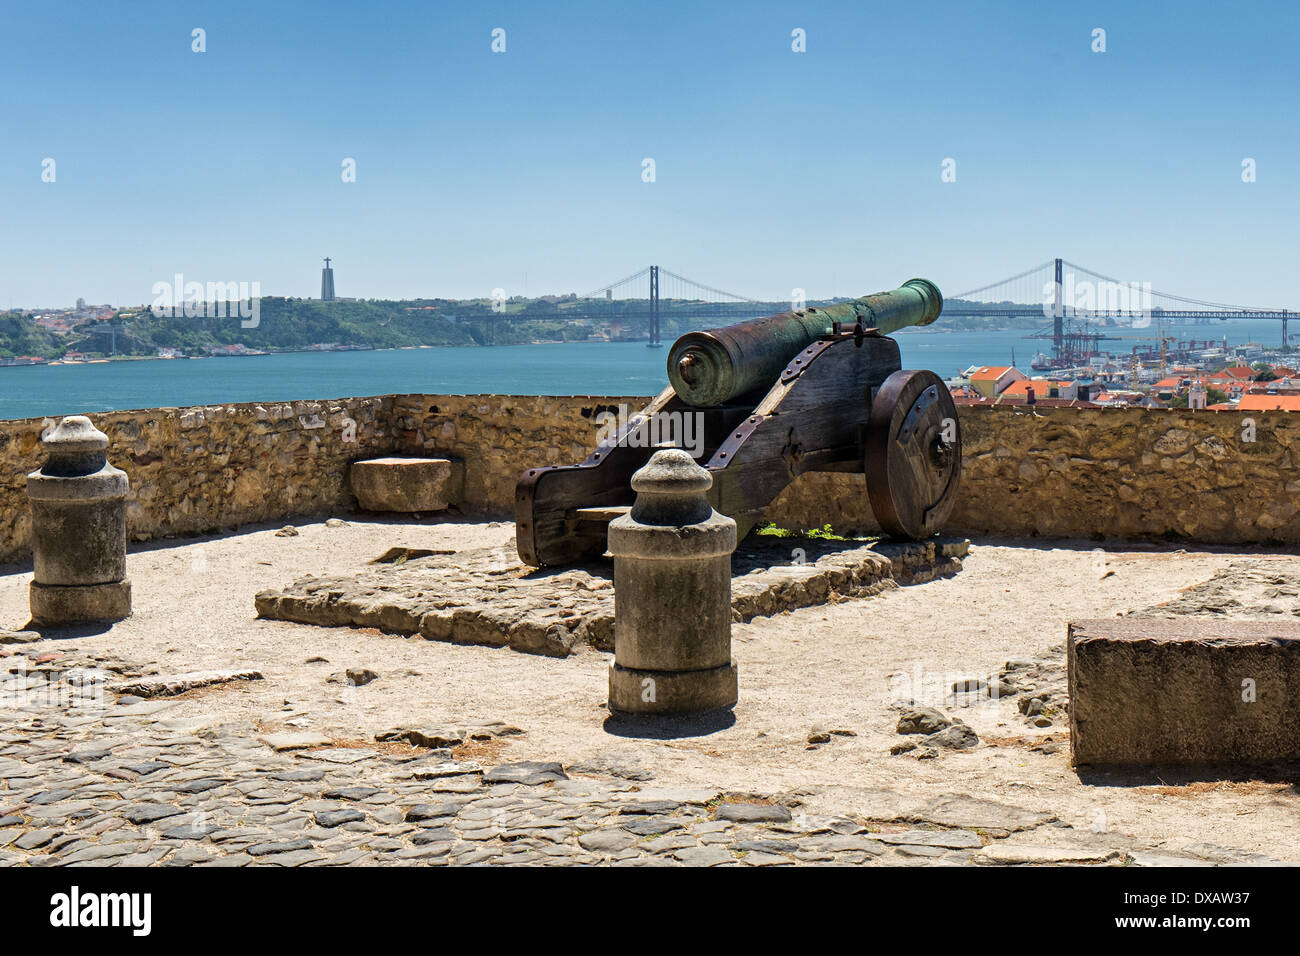 View of a cannon at Castelo de São Jorge pointing towards Cristo Rei statue and Ponte 25 de Abril in Alfama, Lisbon, Portugal Stock Photo